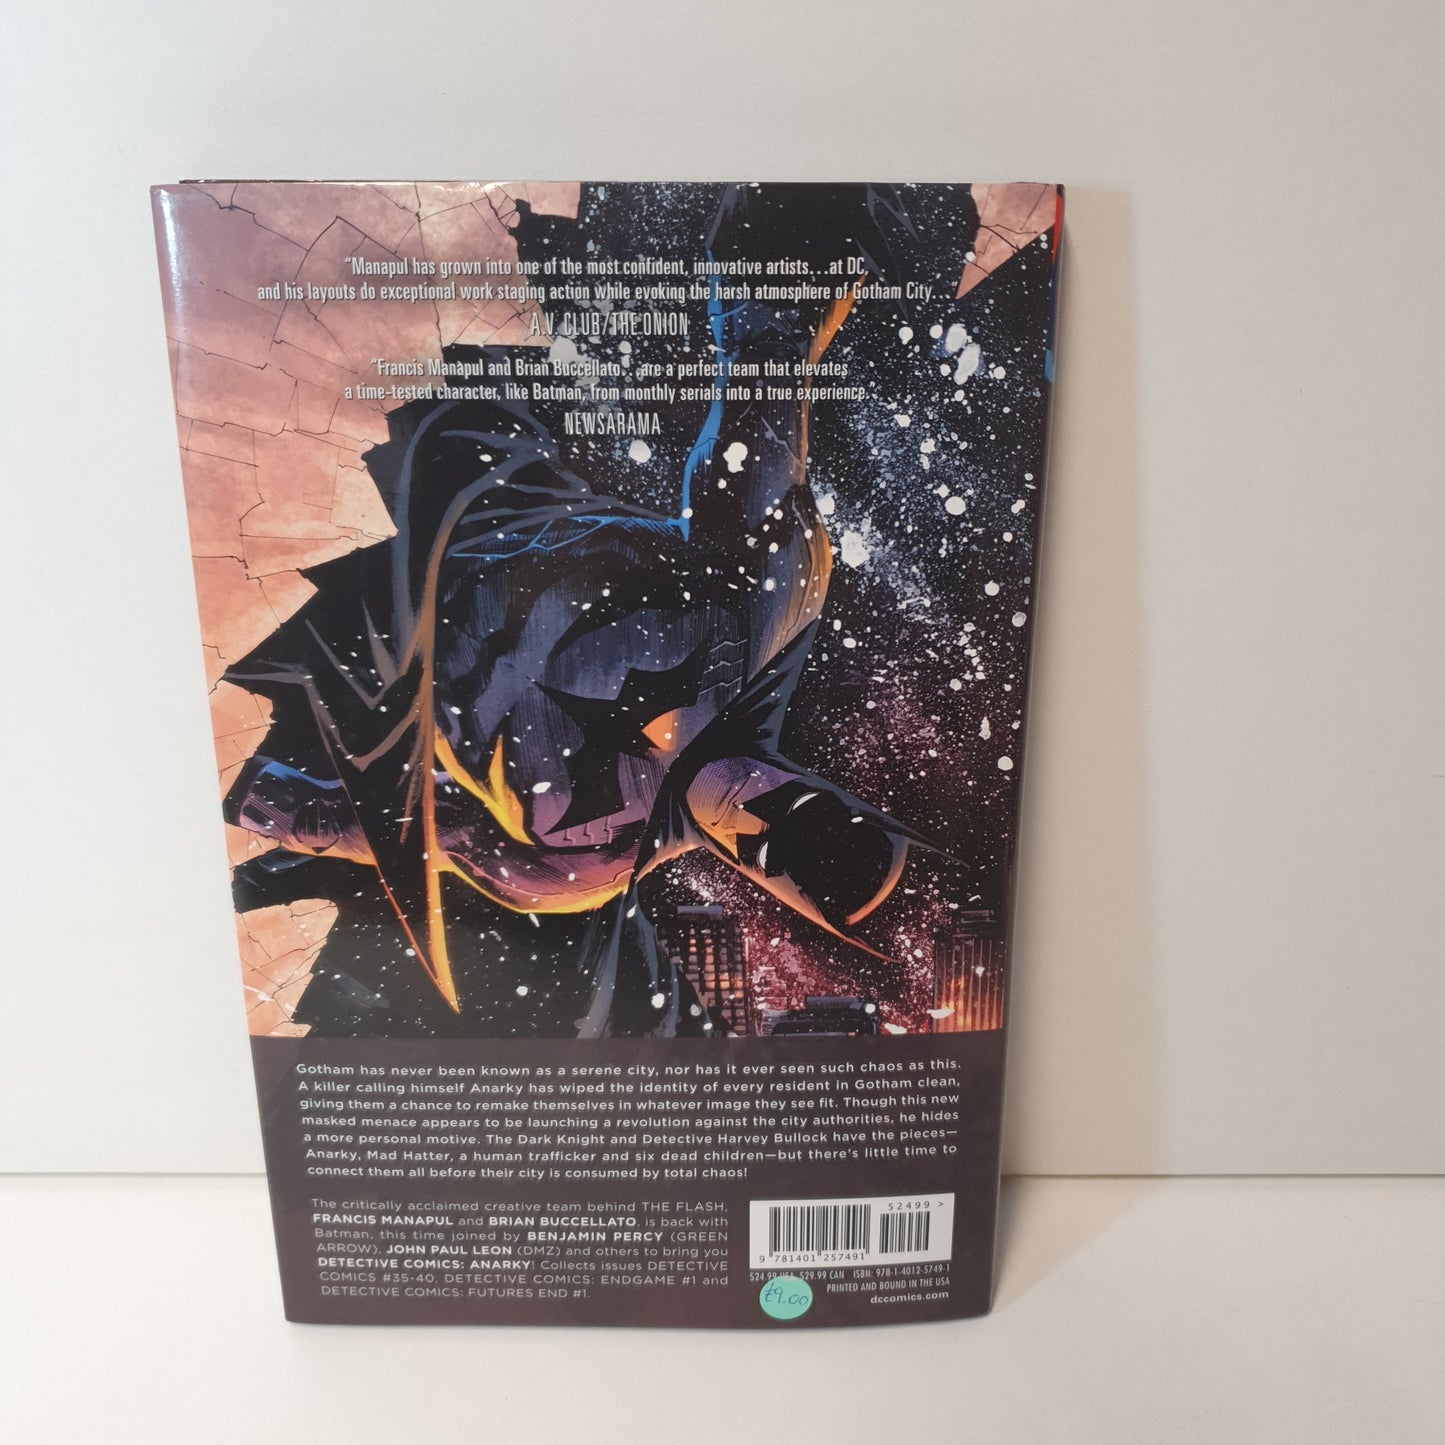 Batman Detective Comics Vol 7 Anarky by Manapul & Buccellato (2016)